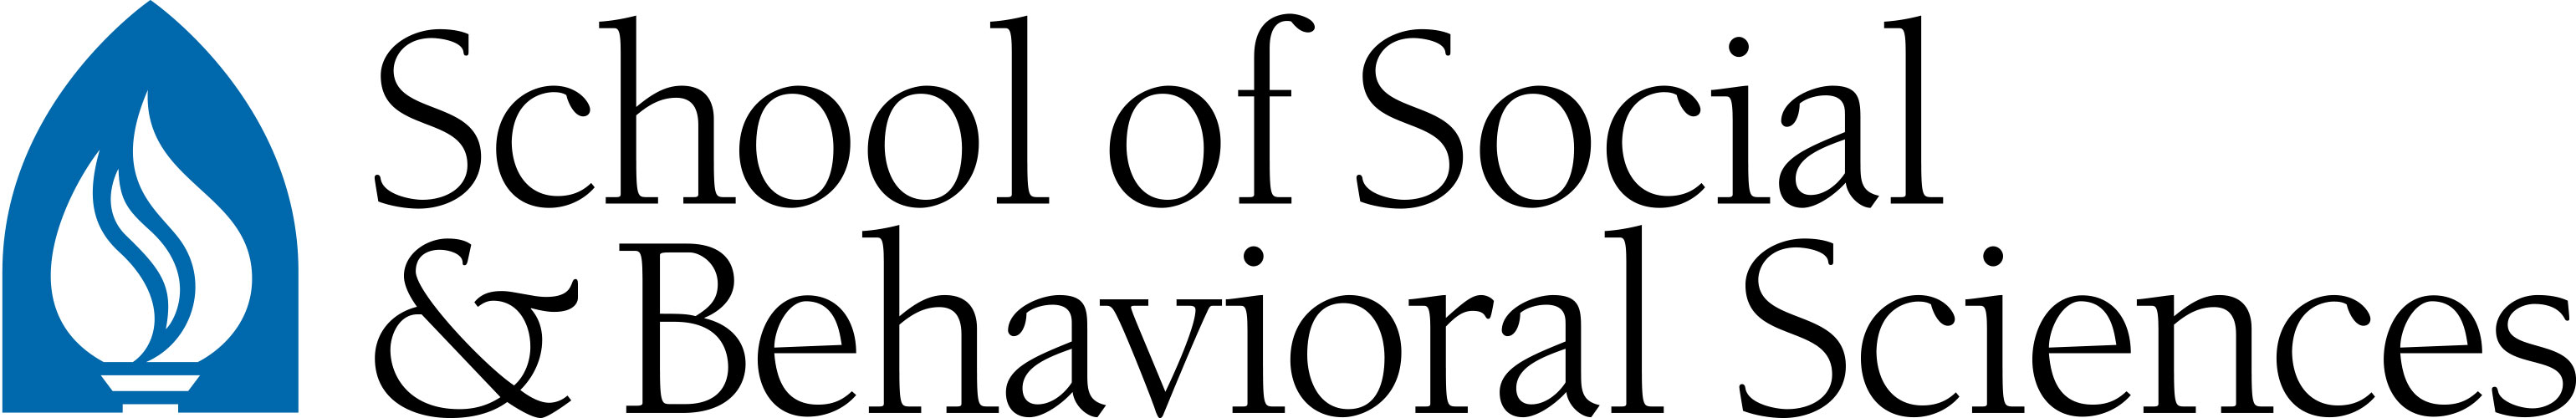 School of Social & Behavioral Sciences